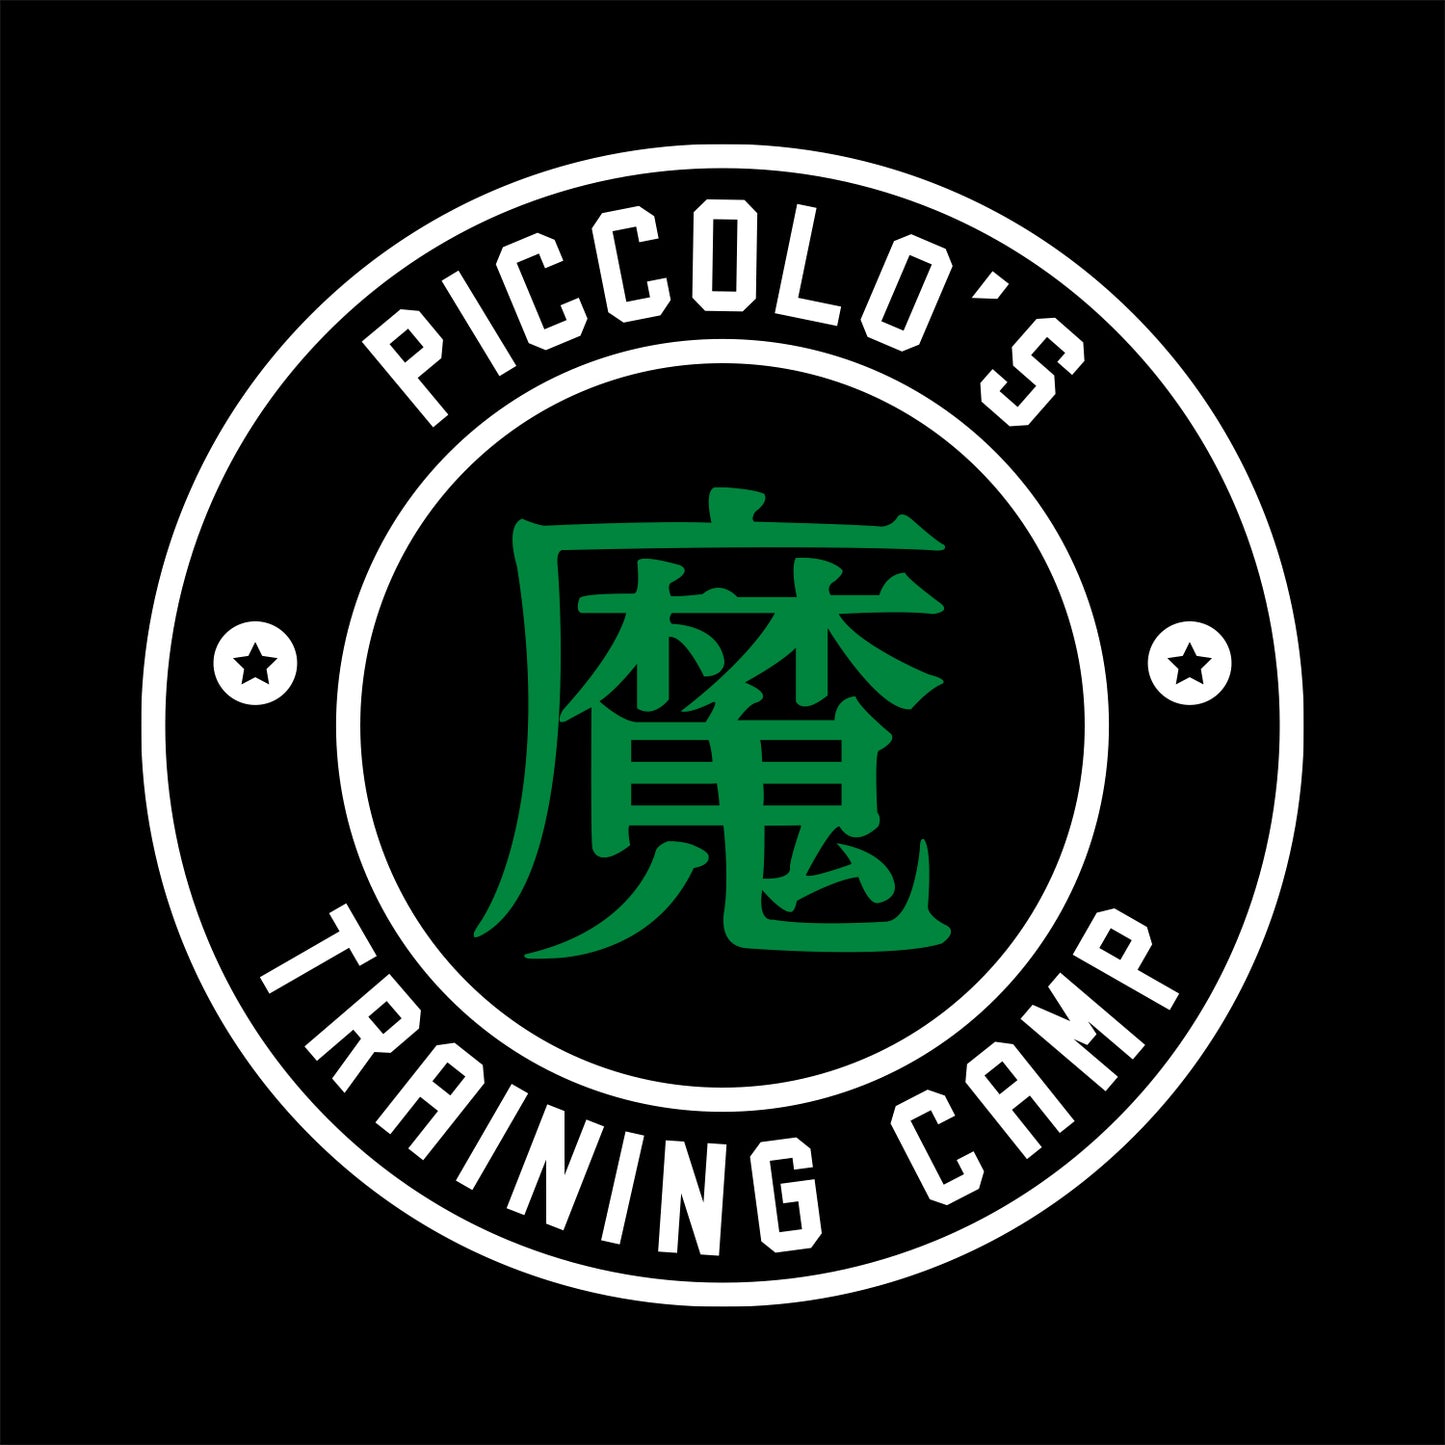 Piccolo's Training Camp T-Shirt